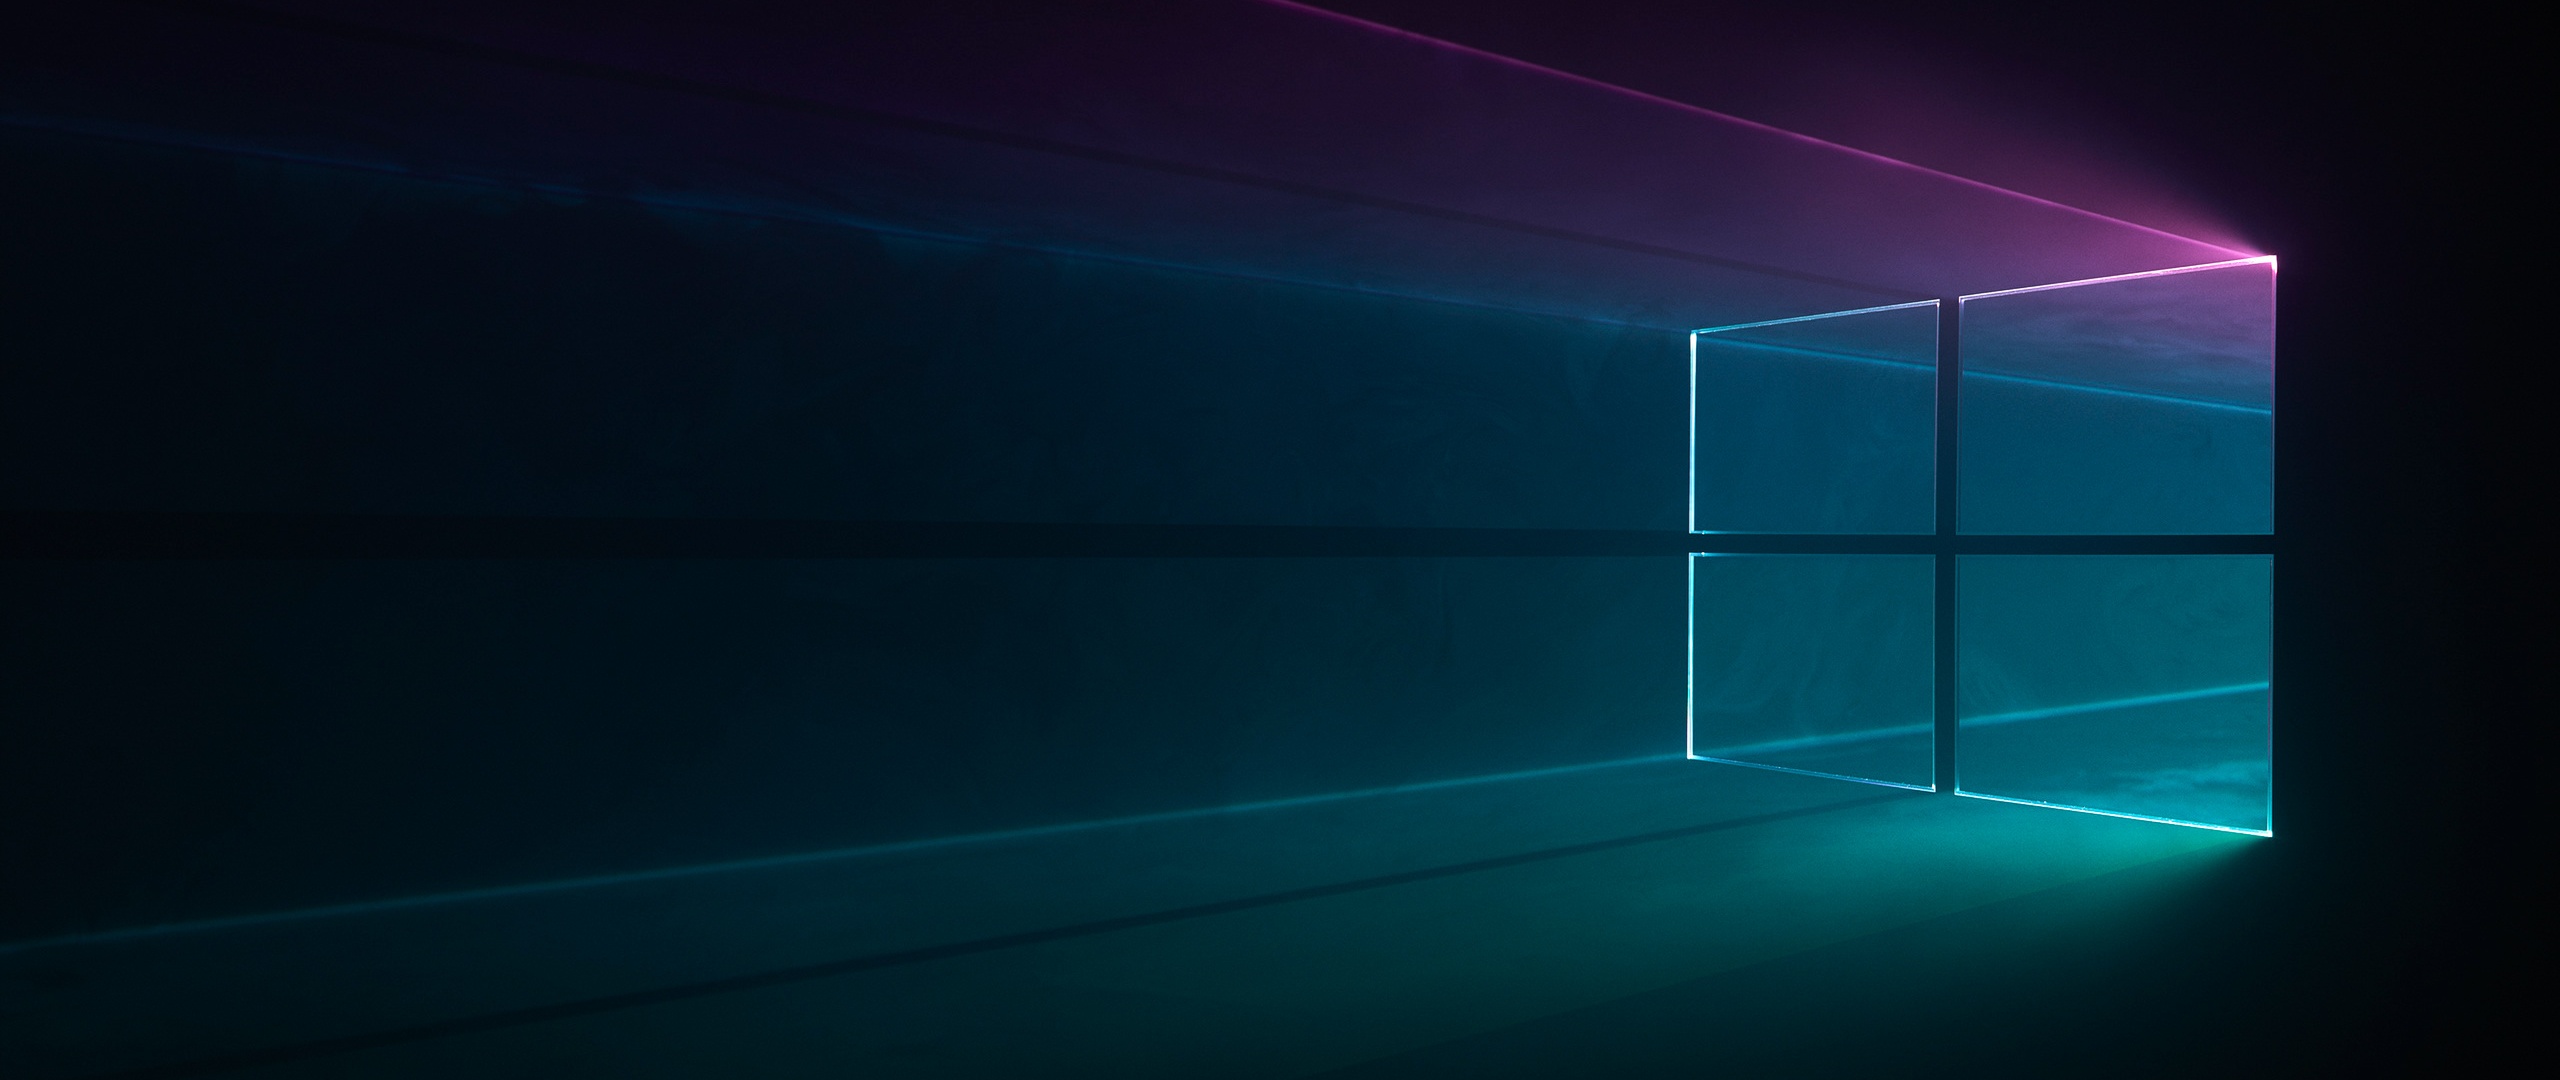 Windows 10 Wallpaper 4K, Microsoft Windows, Technology, #1553